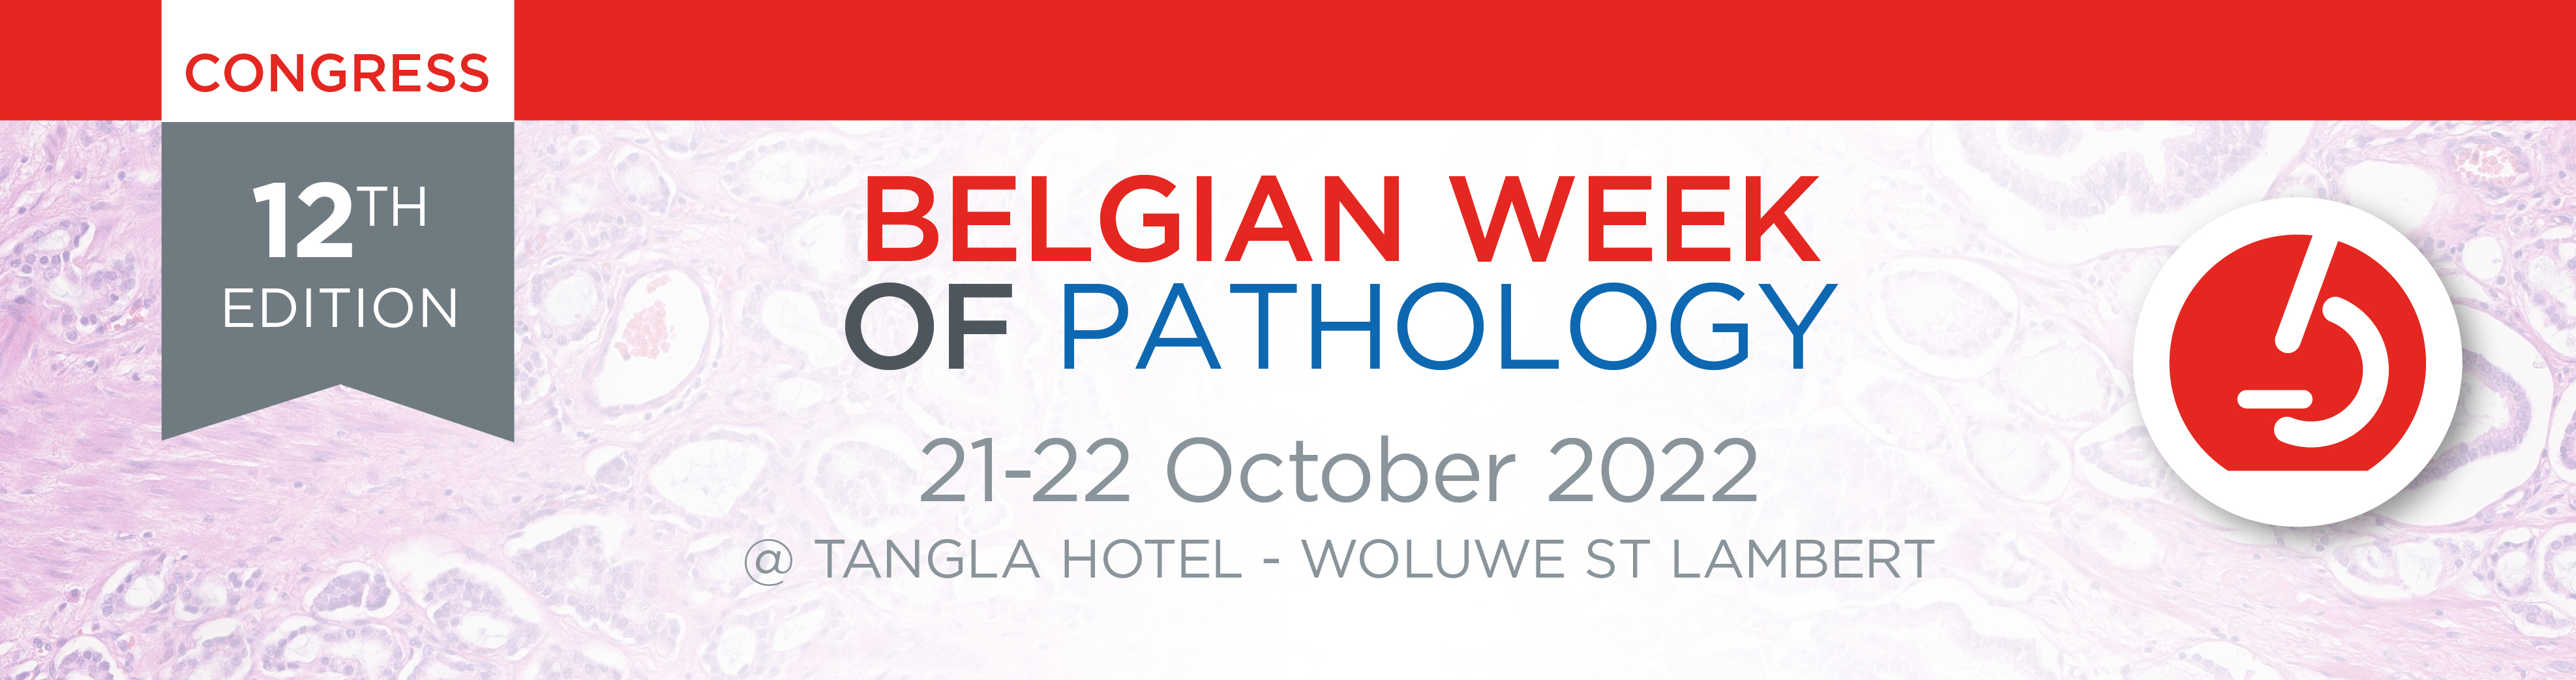 Belgian Week Of Pahtology Banner 2022